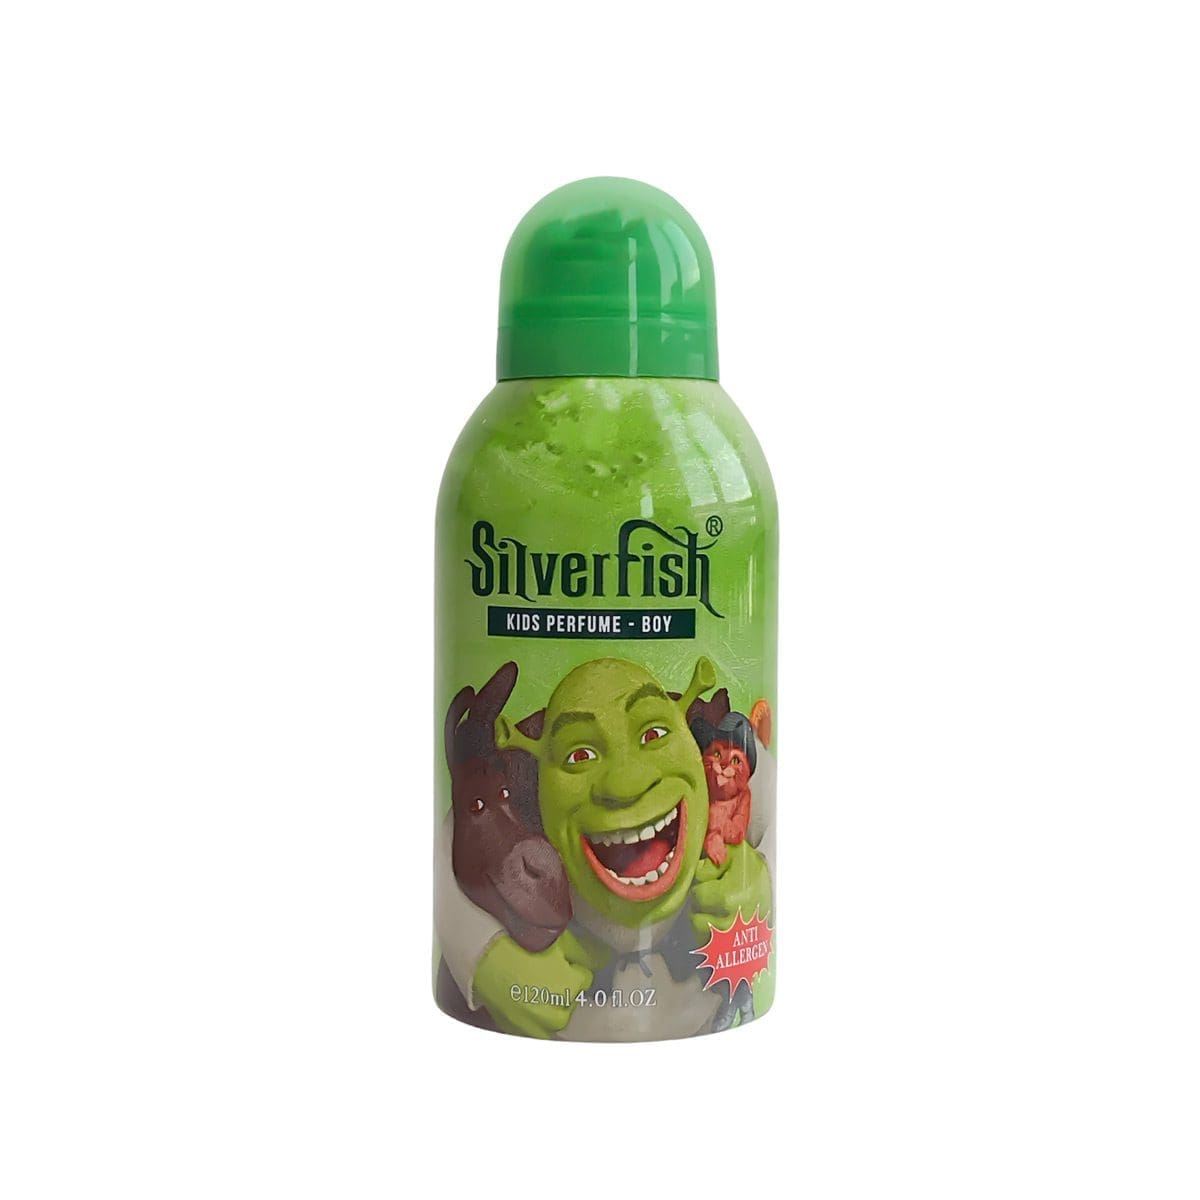 3291 Silver Fish Kids Perfume, Boy120ml